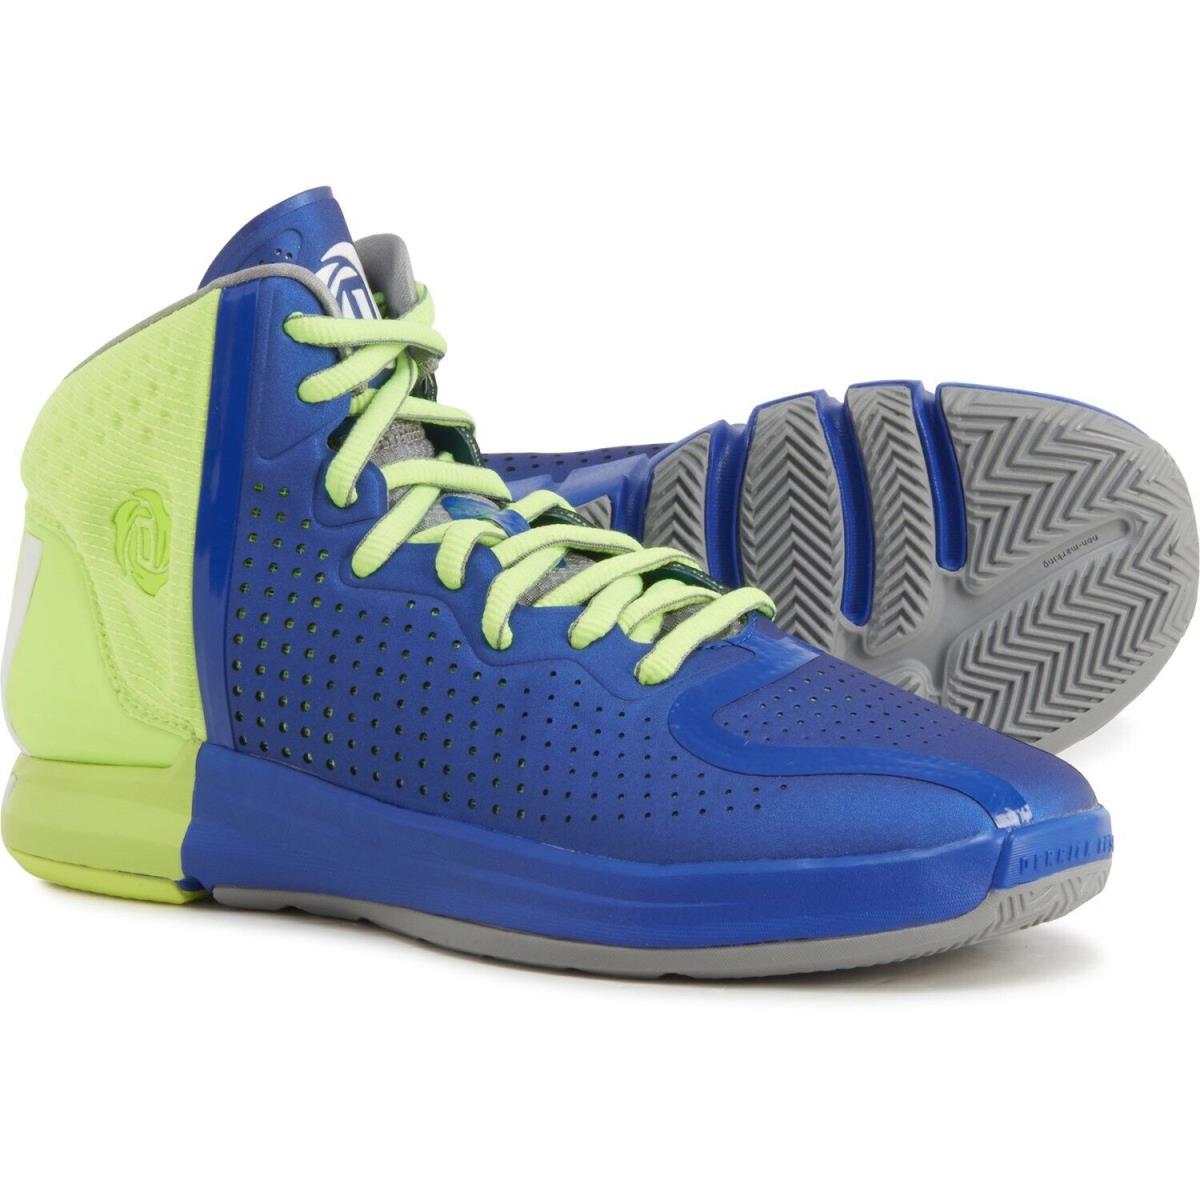 Adidas D Rose 4 Restomod Basketball Shoes For Men Size 11